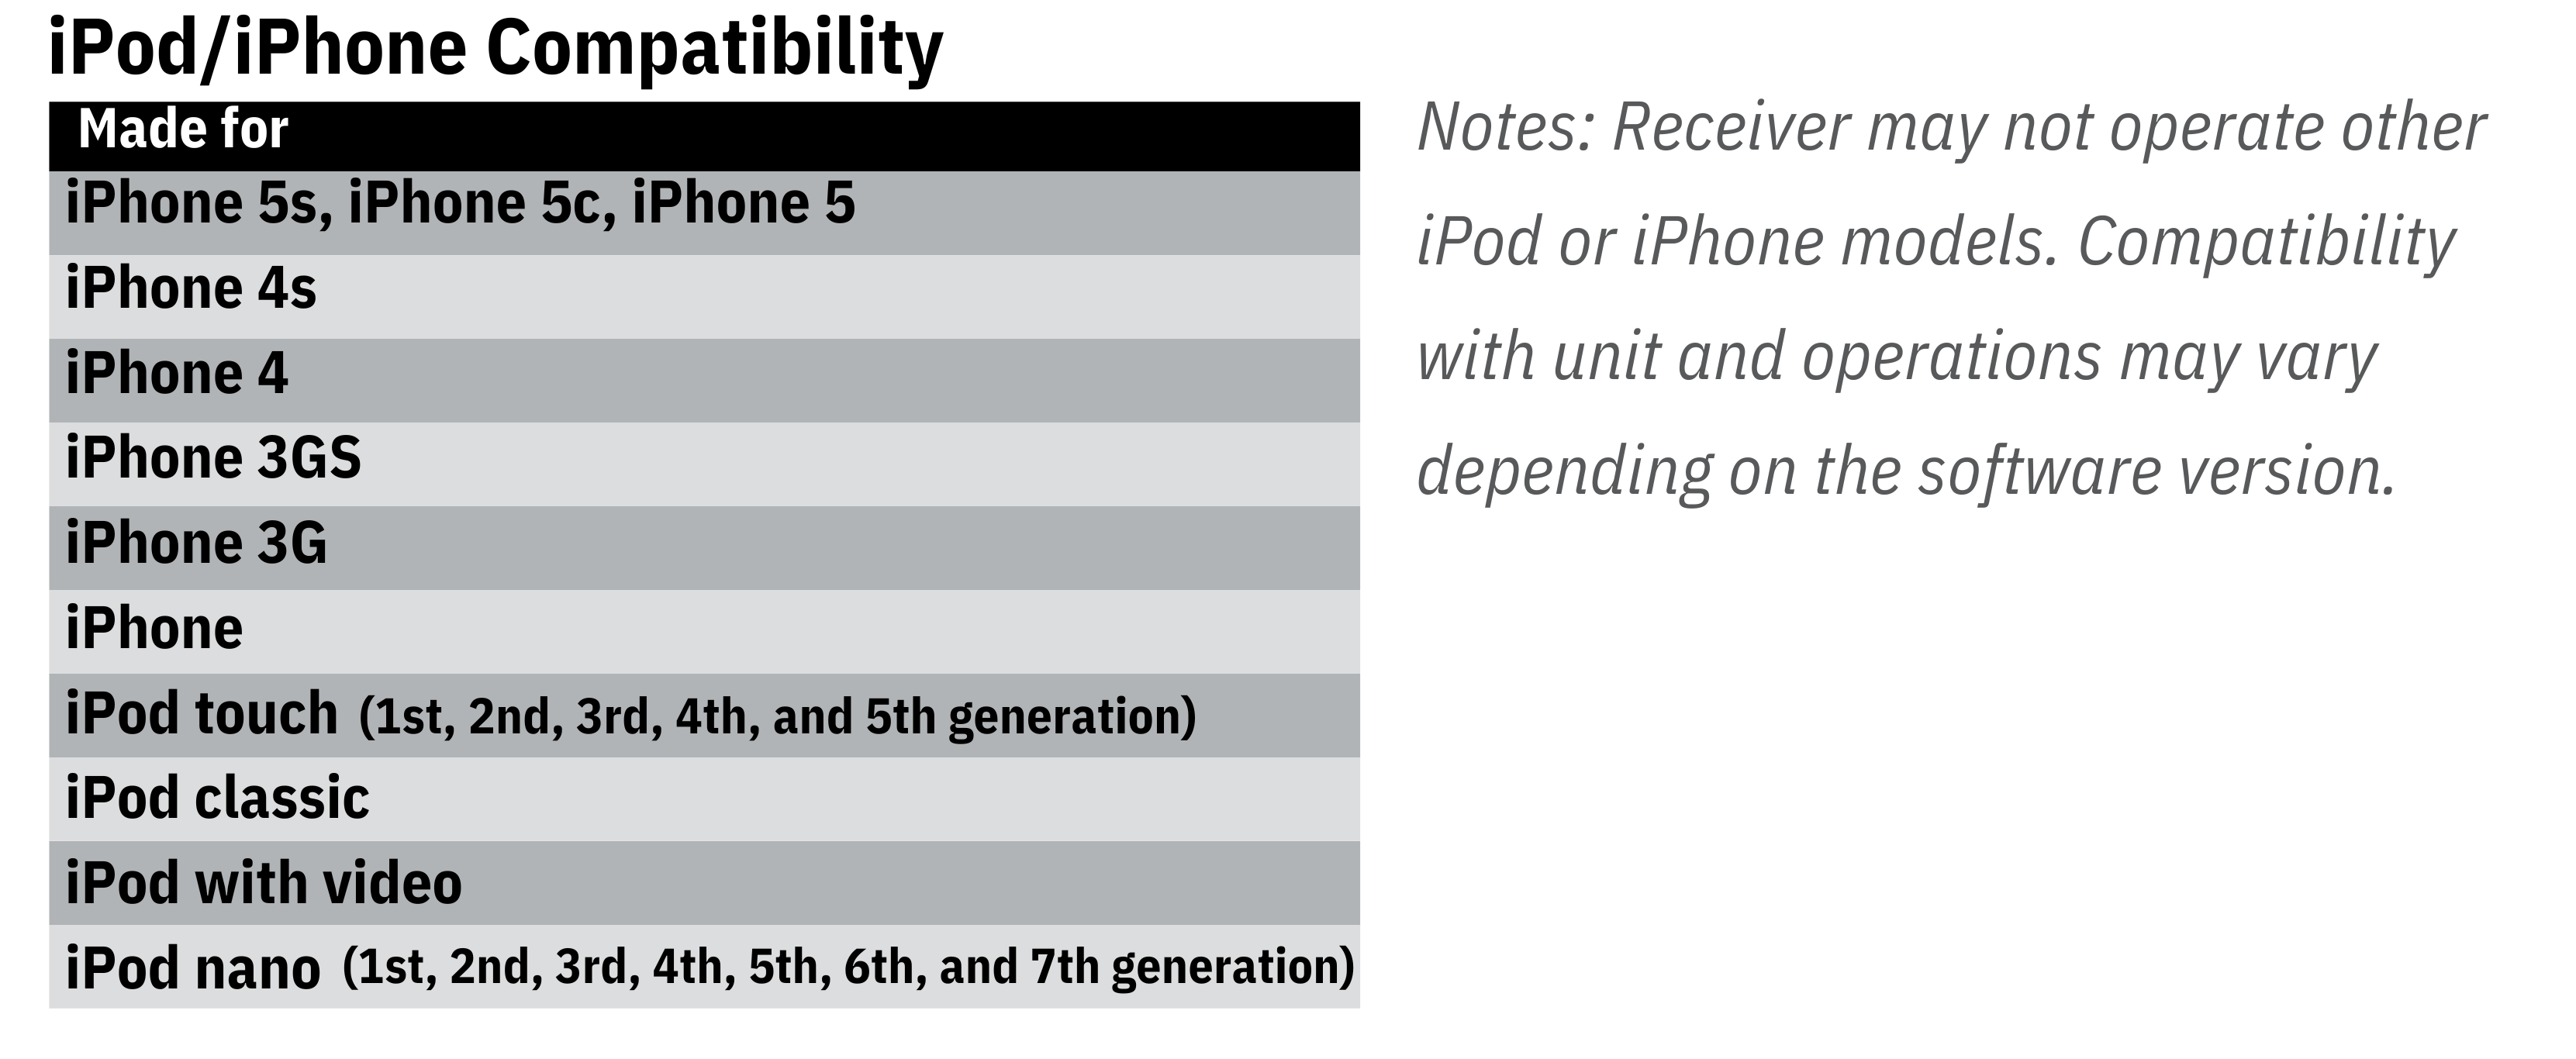 iPod/iPhone Compatibility